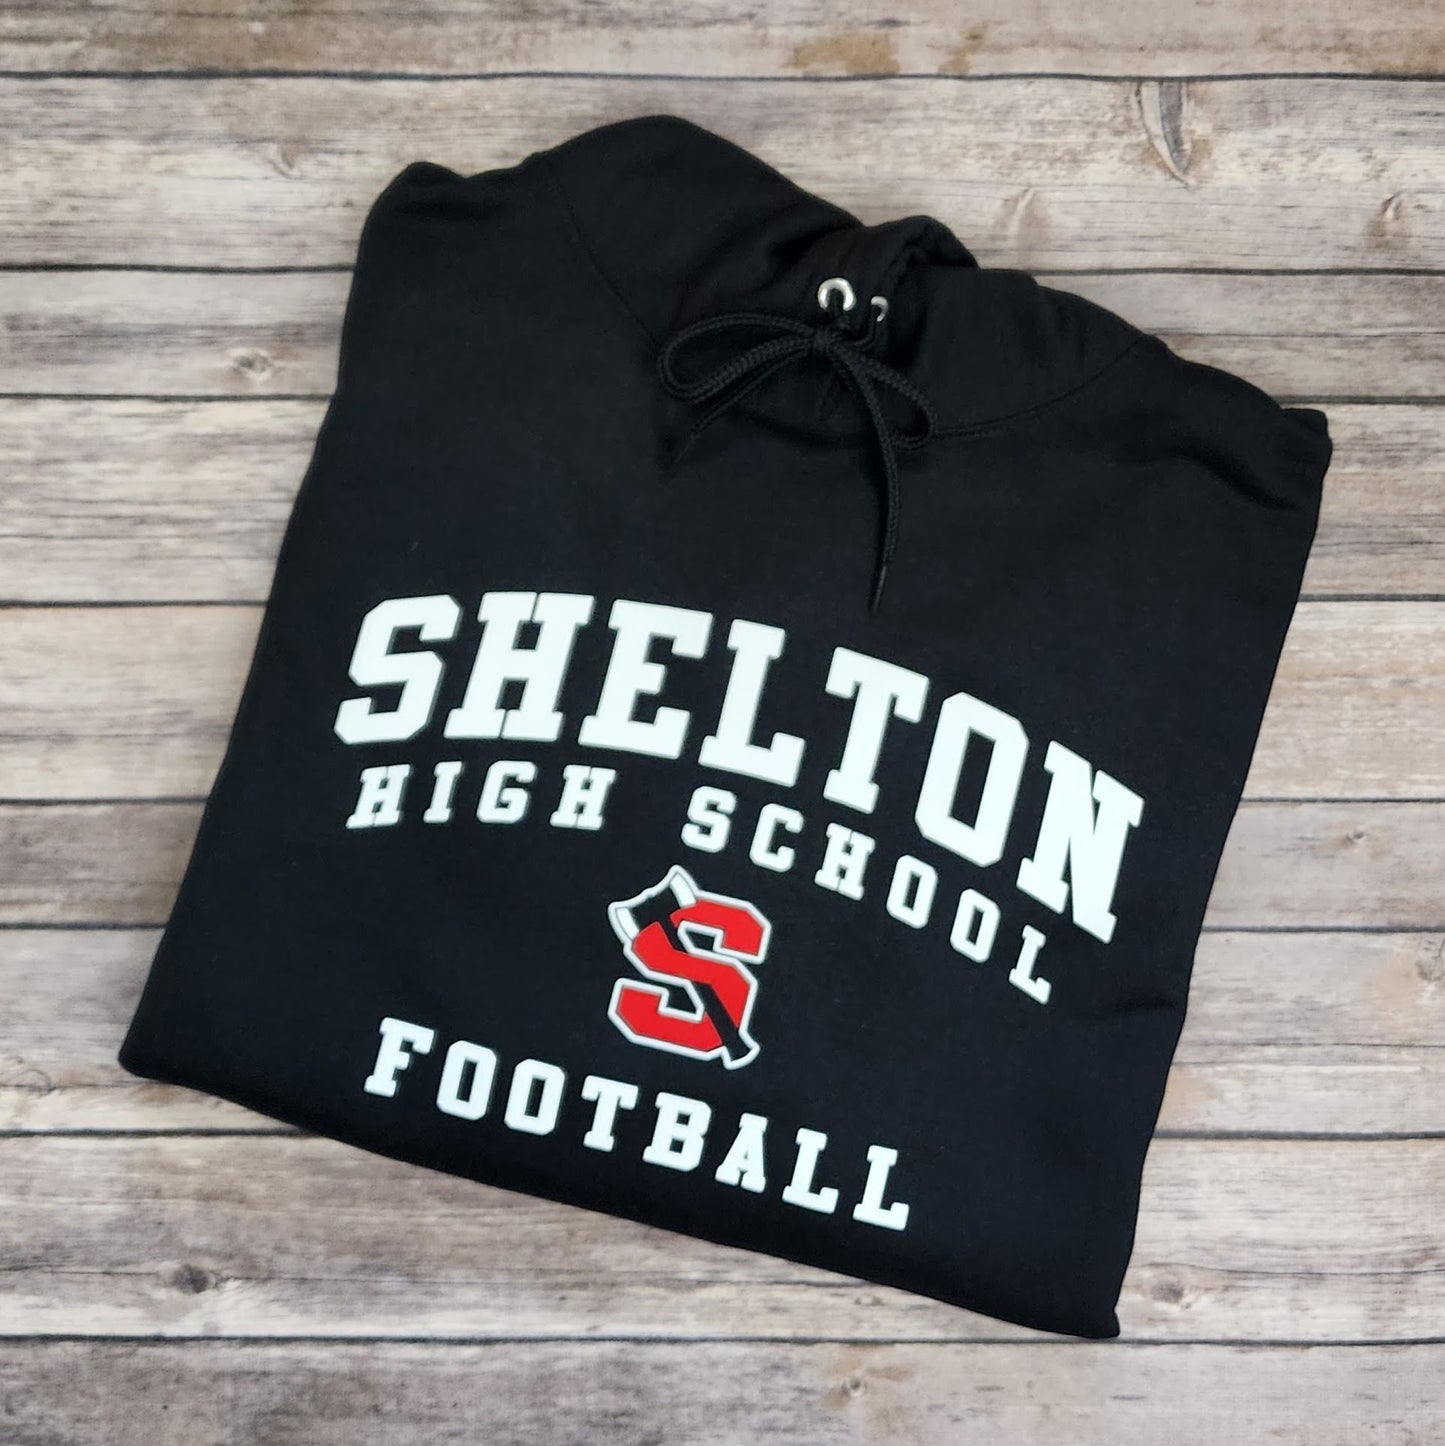 Shelton High School Football with School Logo Shirt